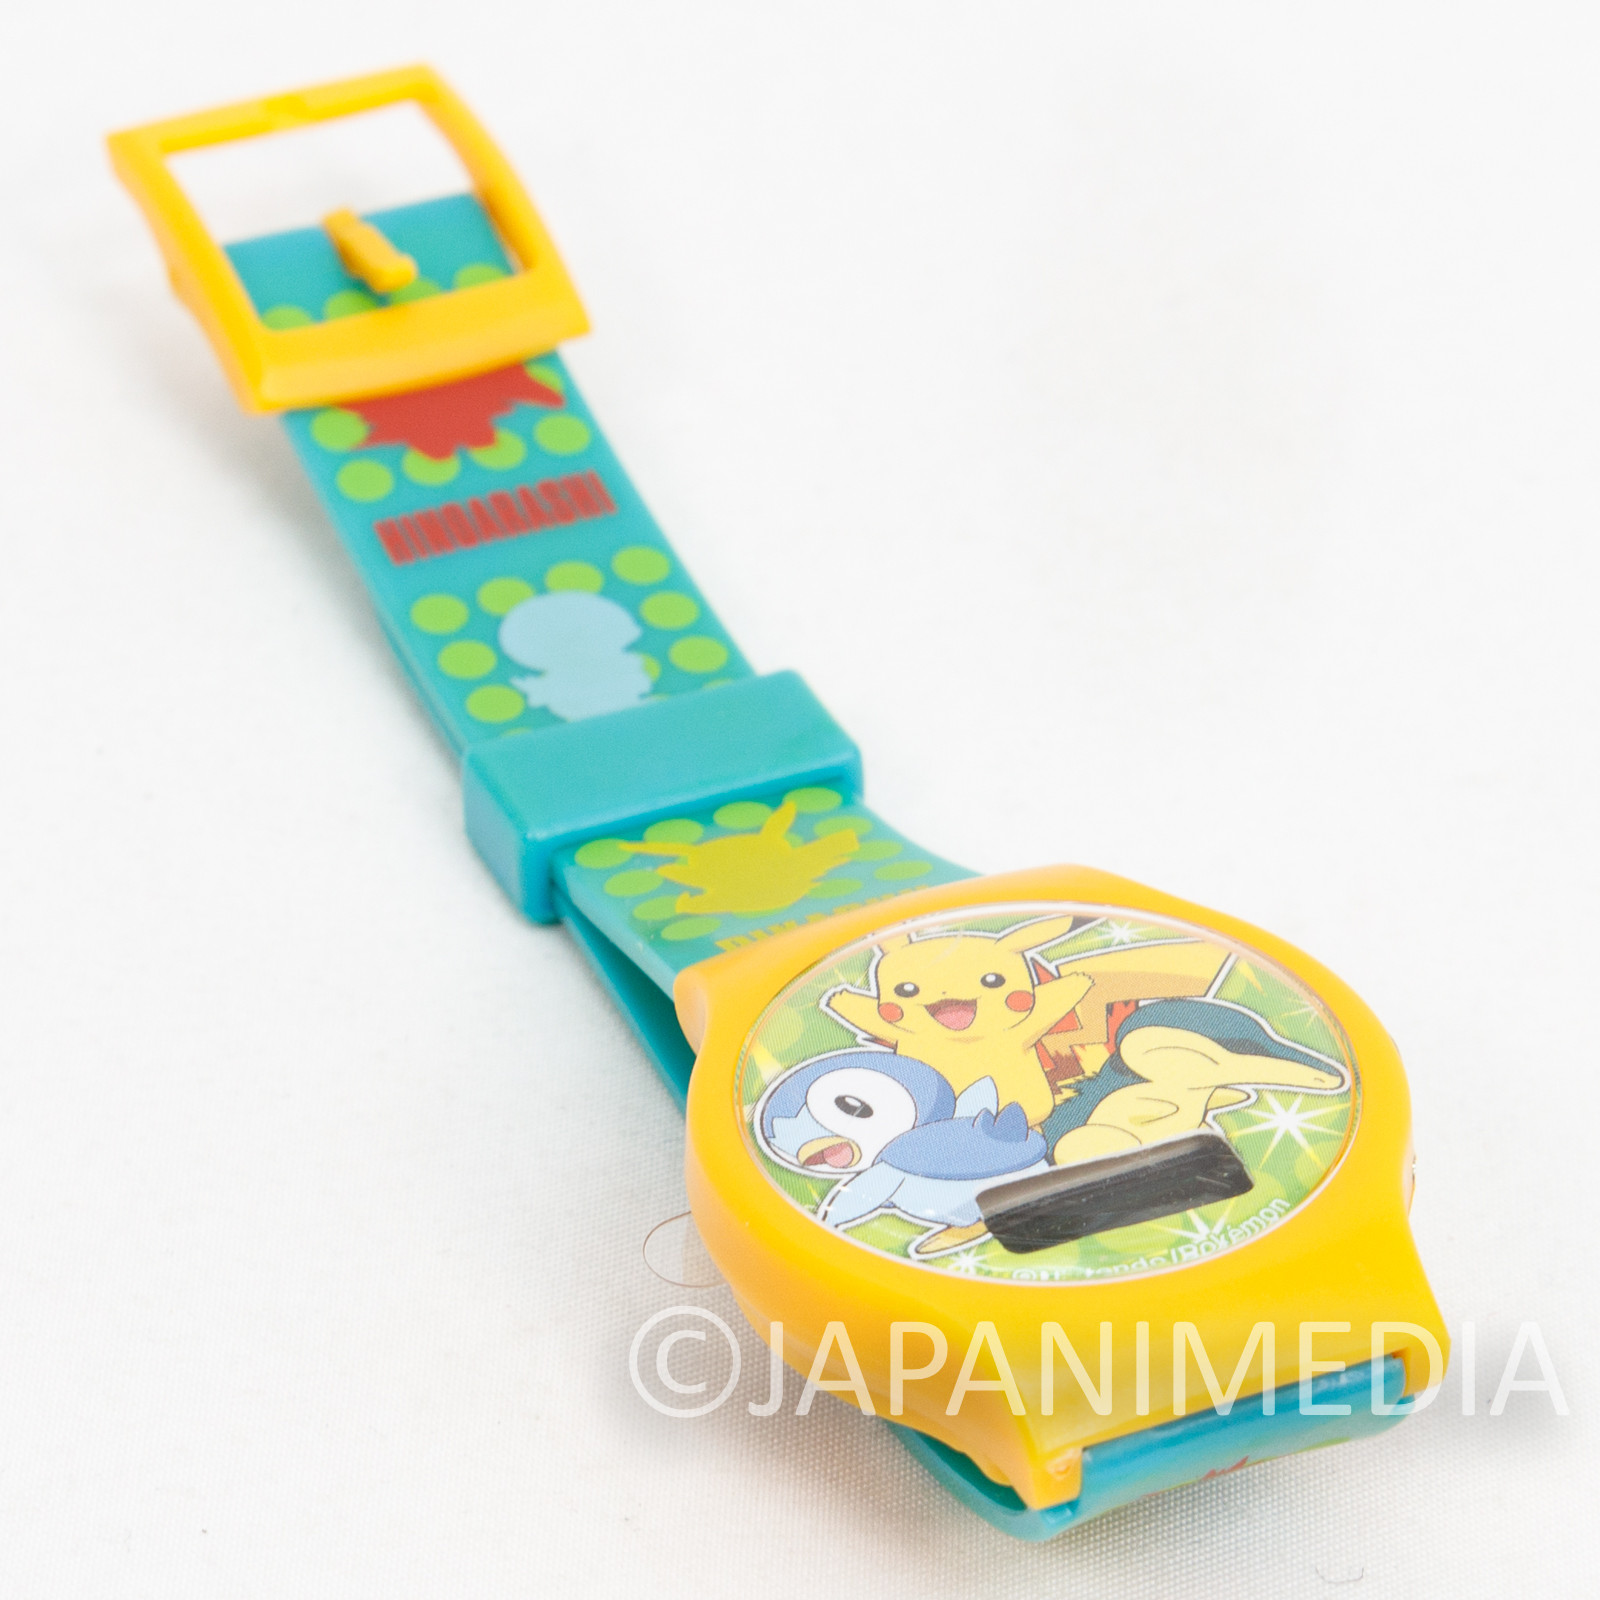 Pokemon Diamond & Pearl Digital Wrist Watch Toy #4 JAPAN ANIME